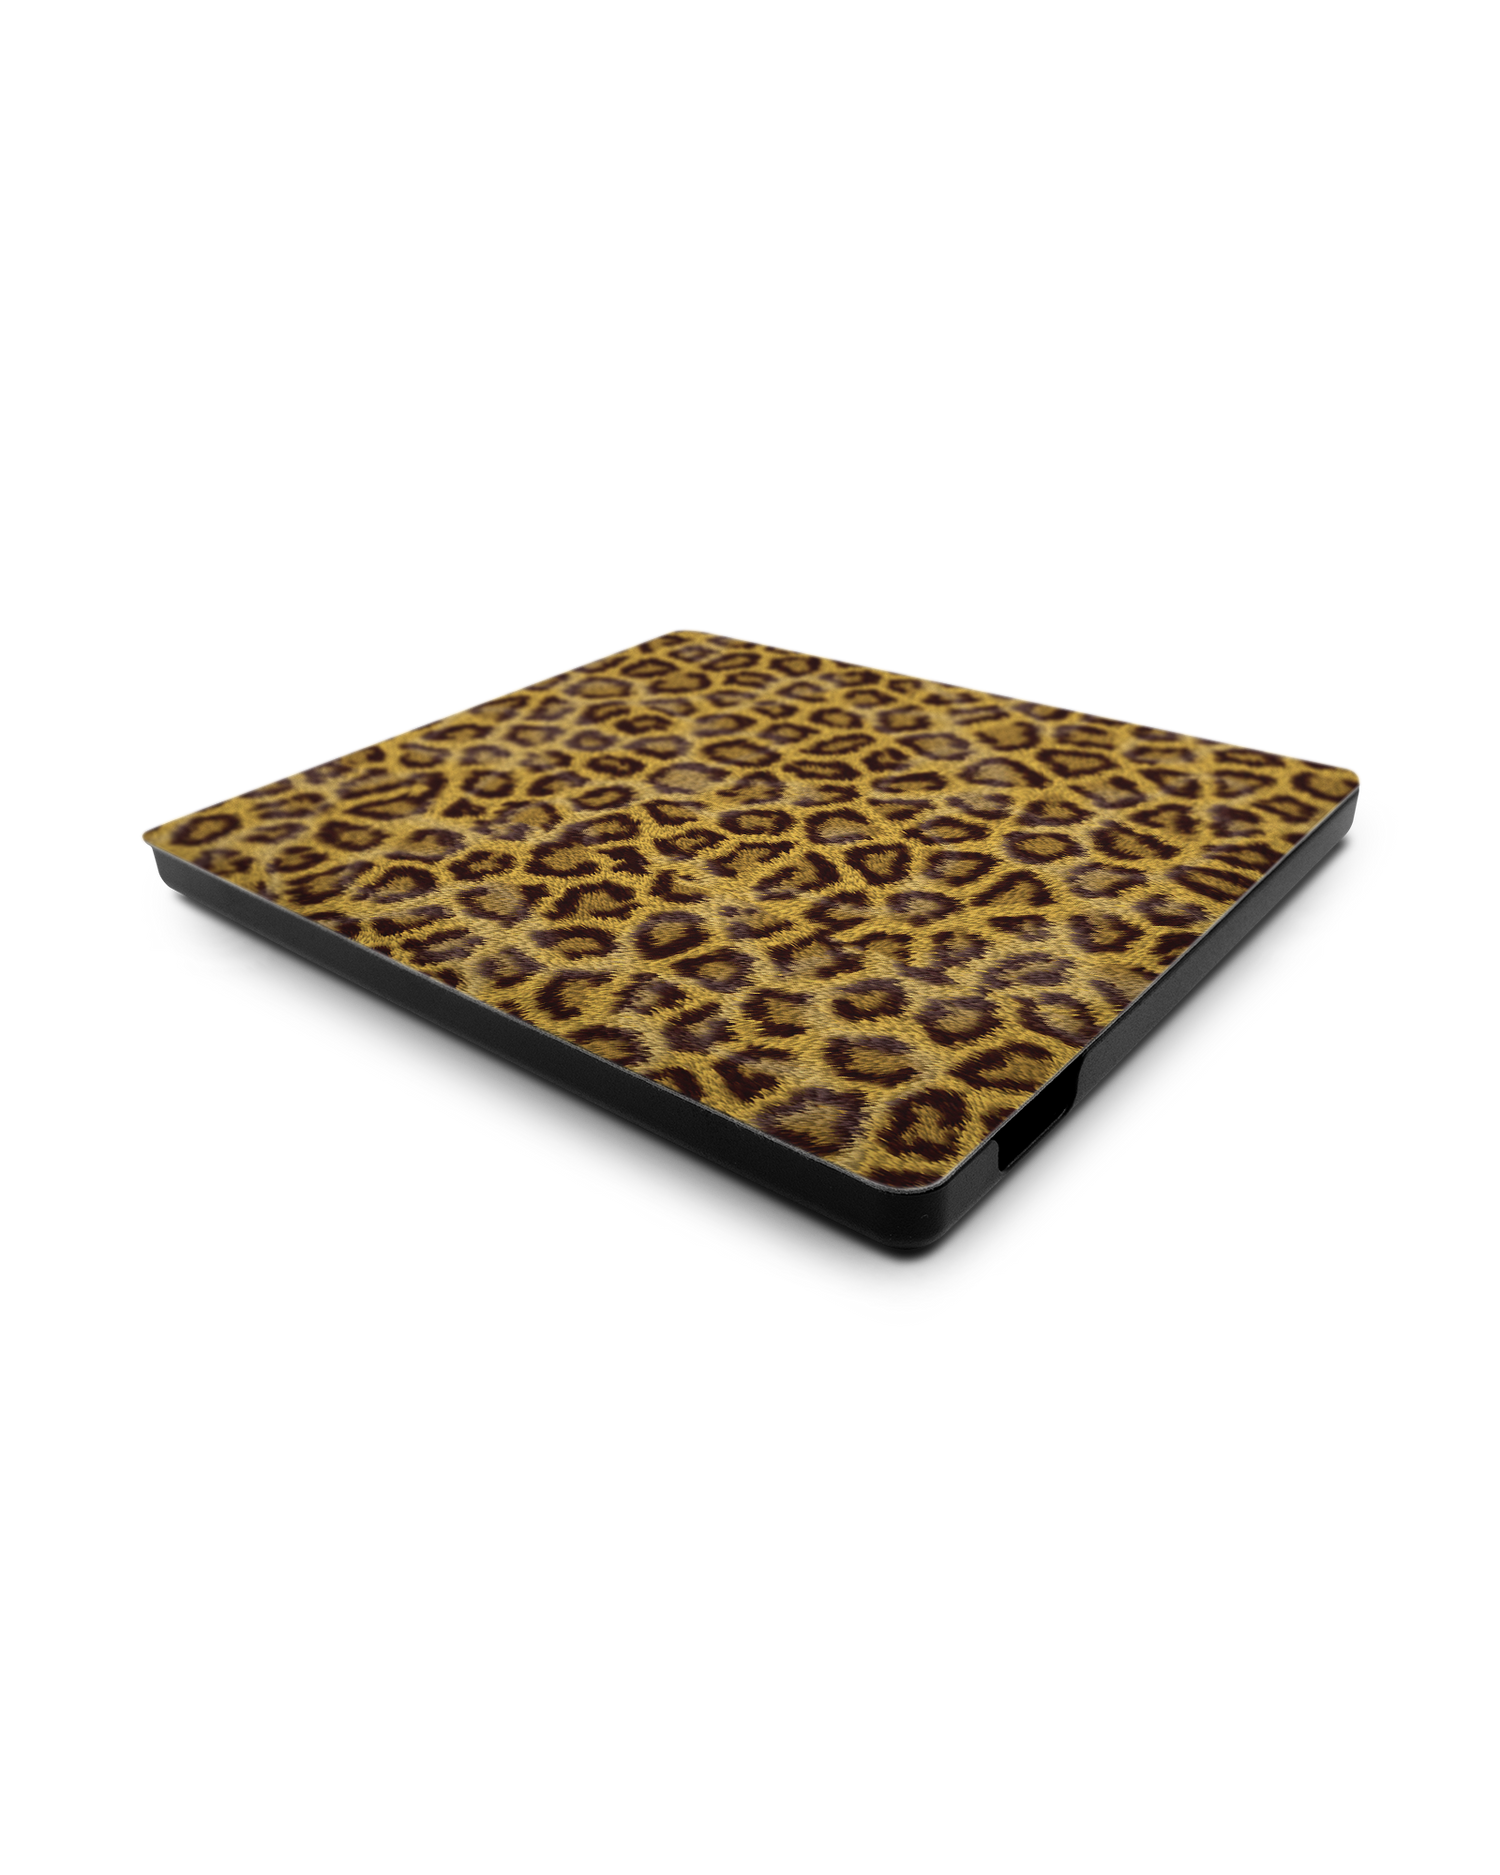 Leopard Skin eBook Reader Smart Case für Amazon Kindle Oasis: Liegend